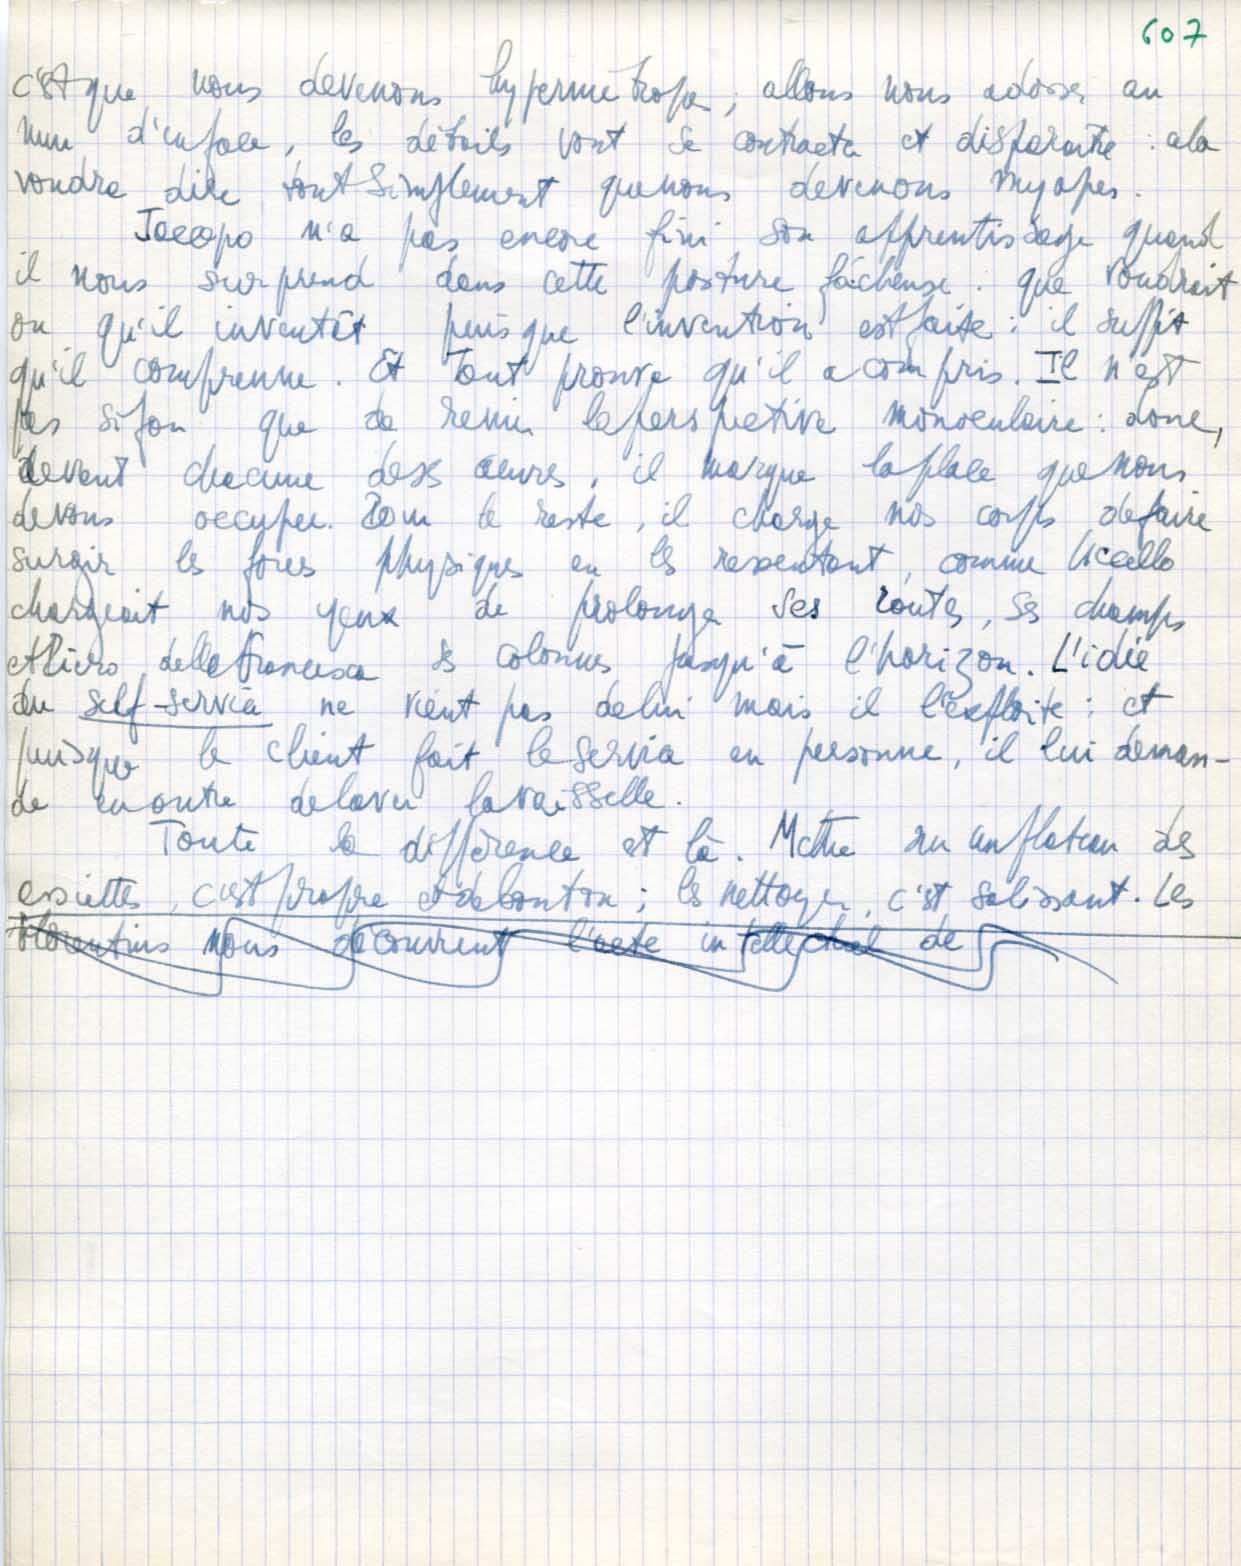 Jean-Paul Sartre 963 Seiten Manuskript über Tintoretto